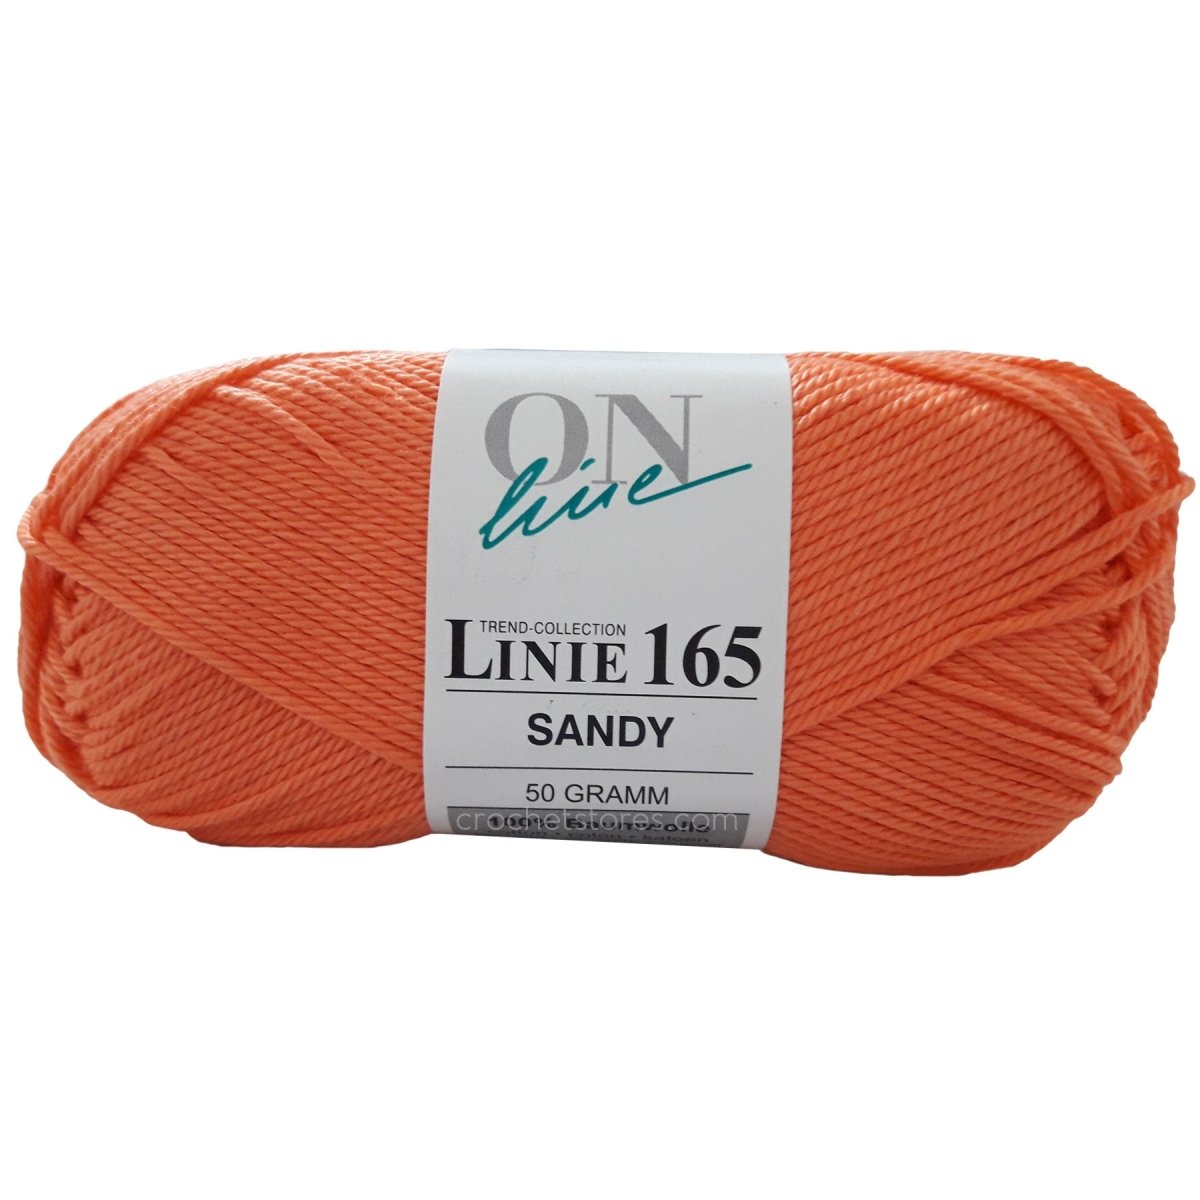 SANDY - Crochetstores110165-020740134366166122